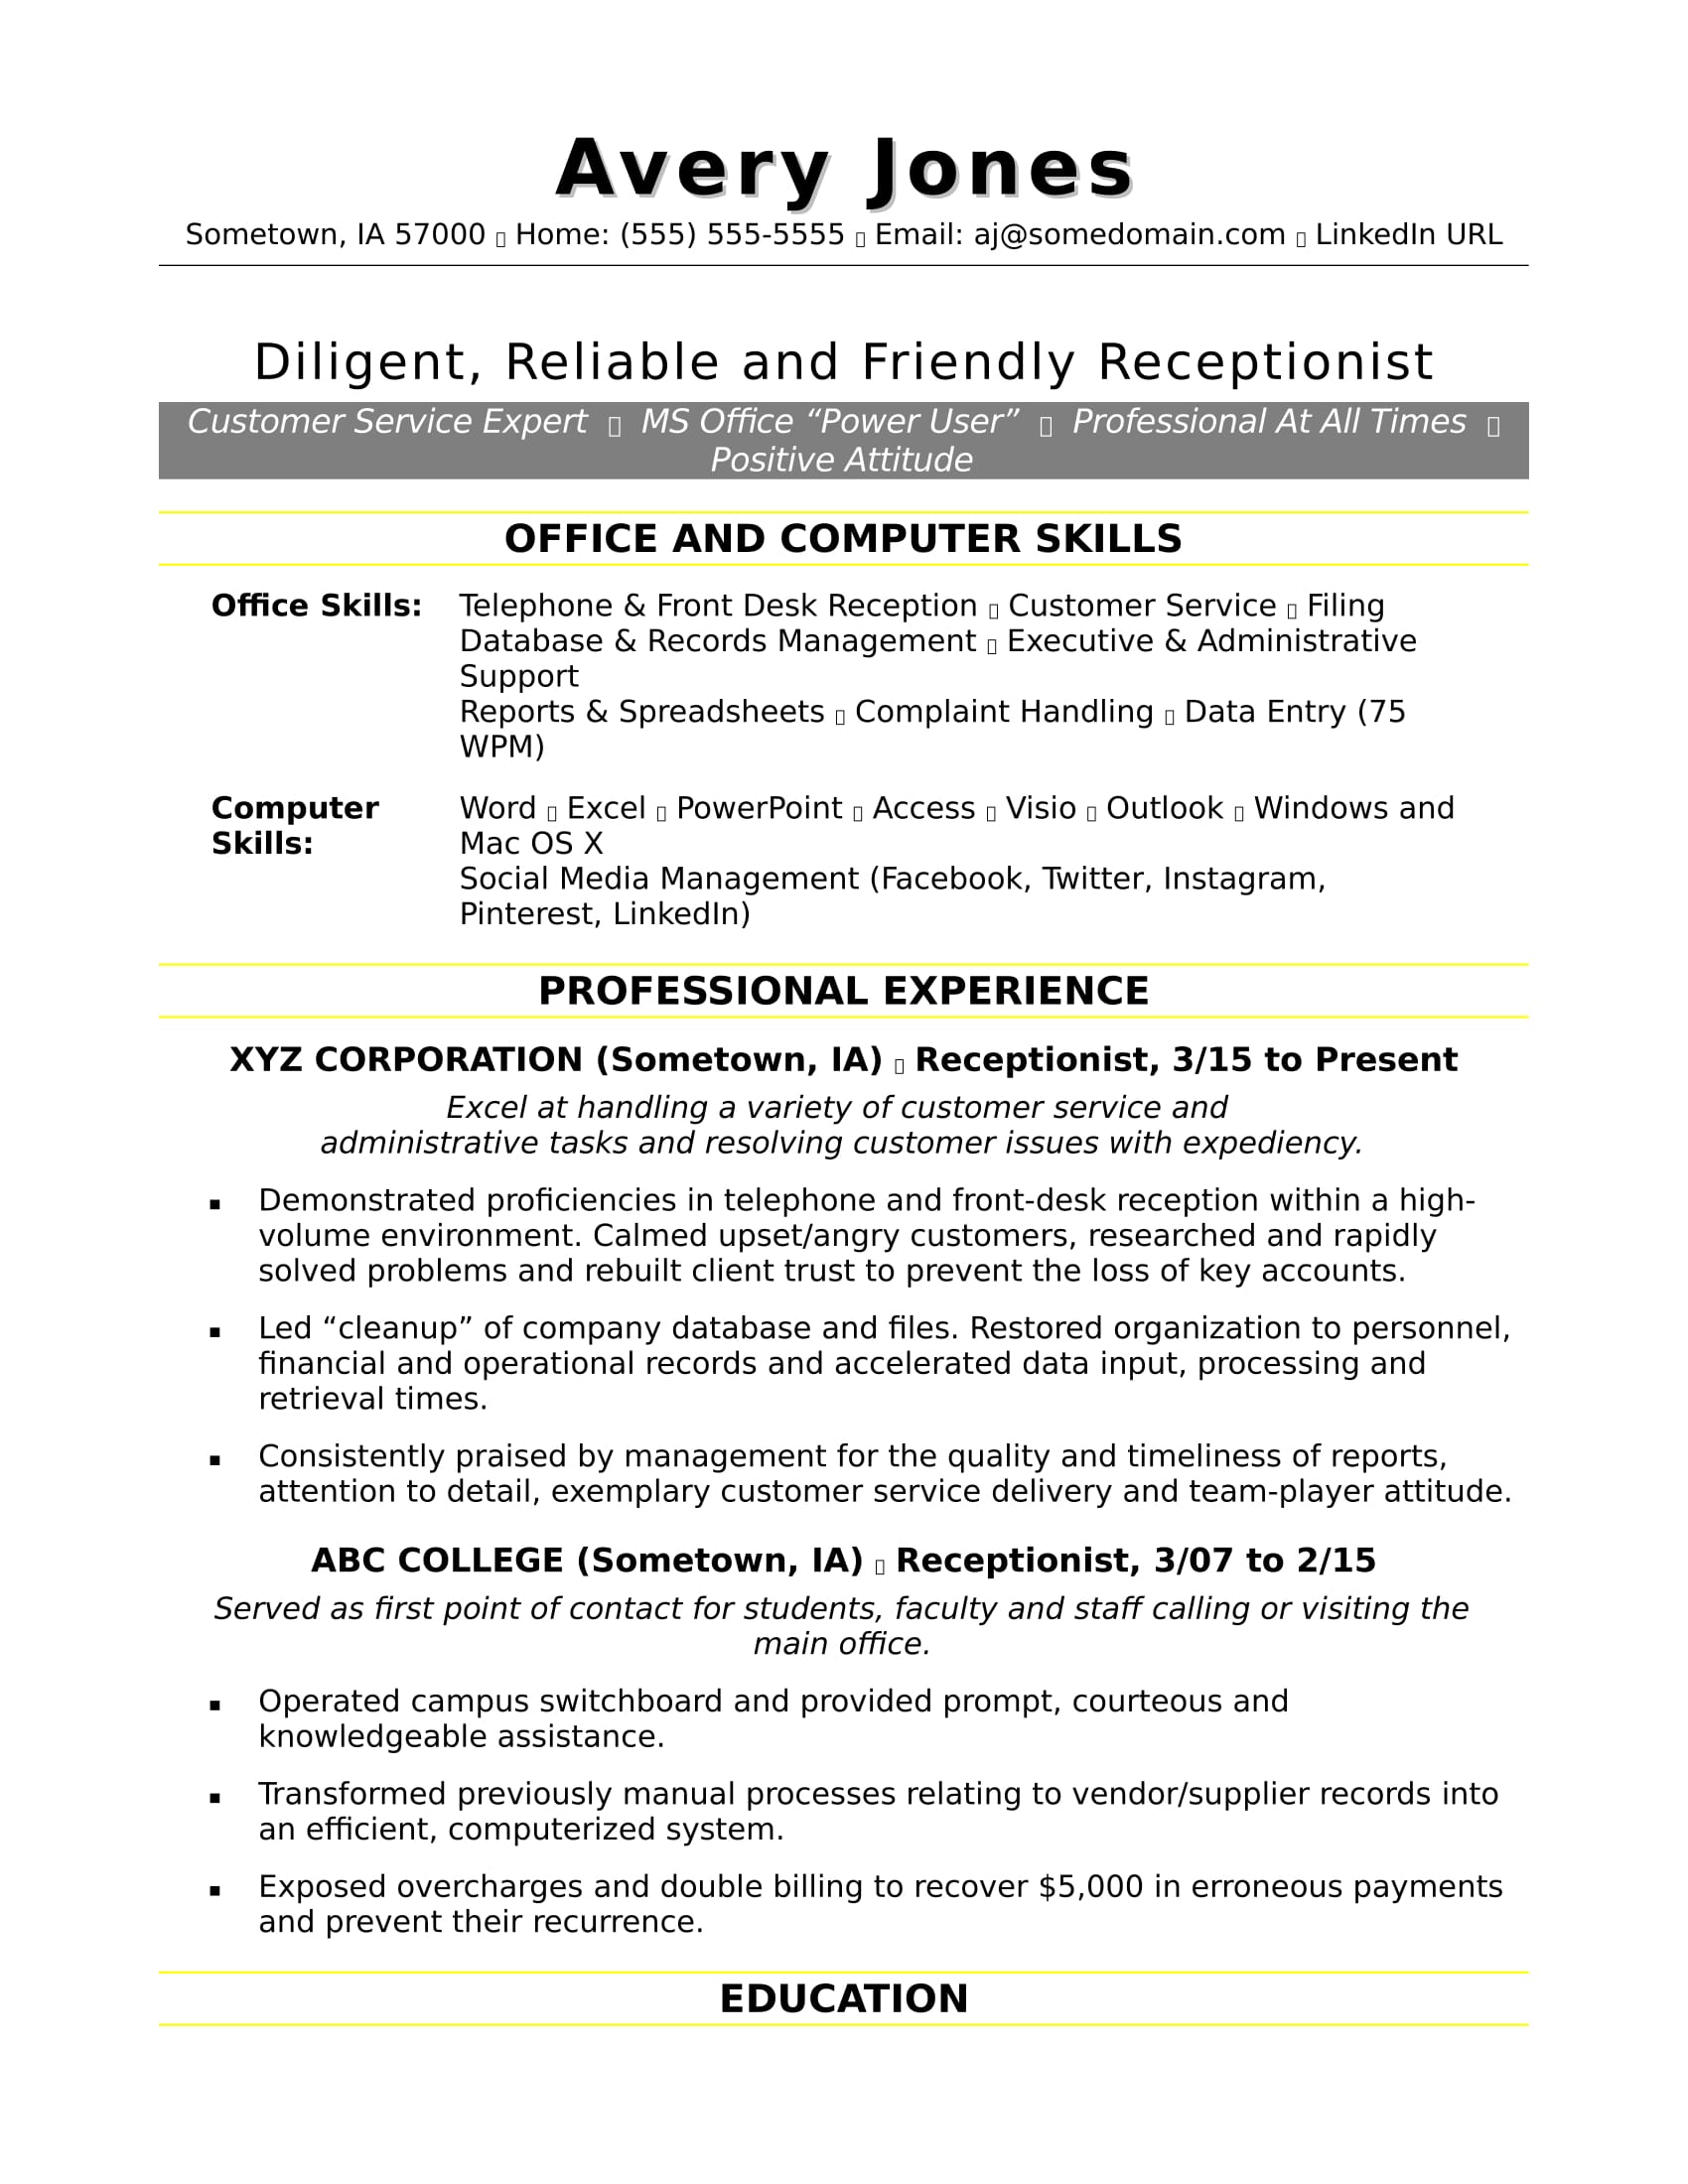 Customer Service Resume Skills Receptionist customer service resume skills|wikiresume.com